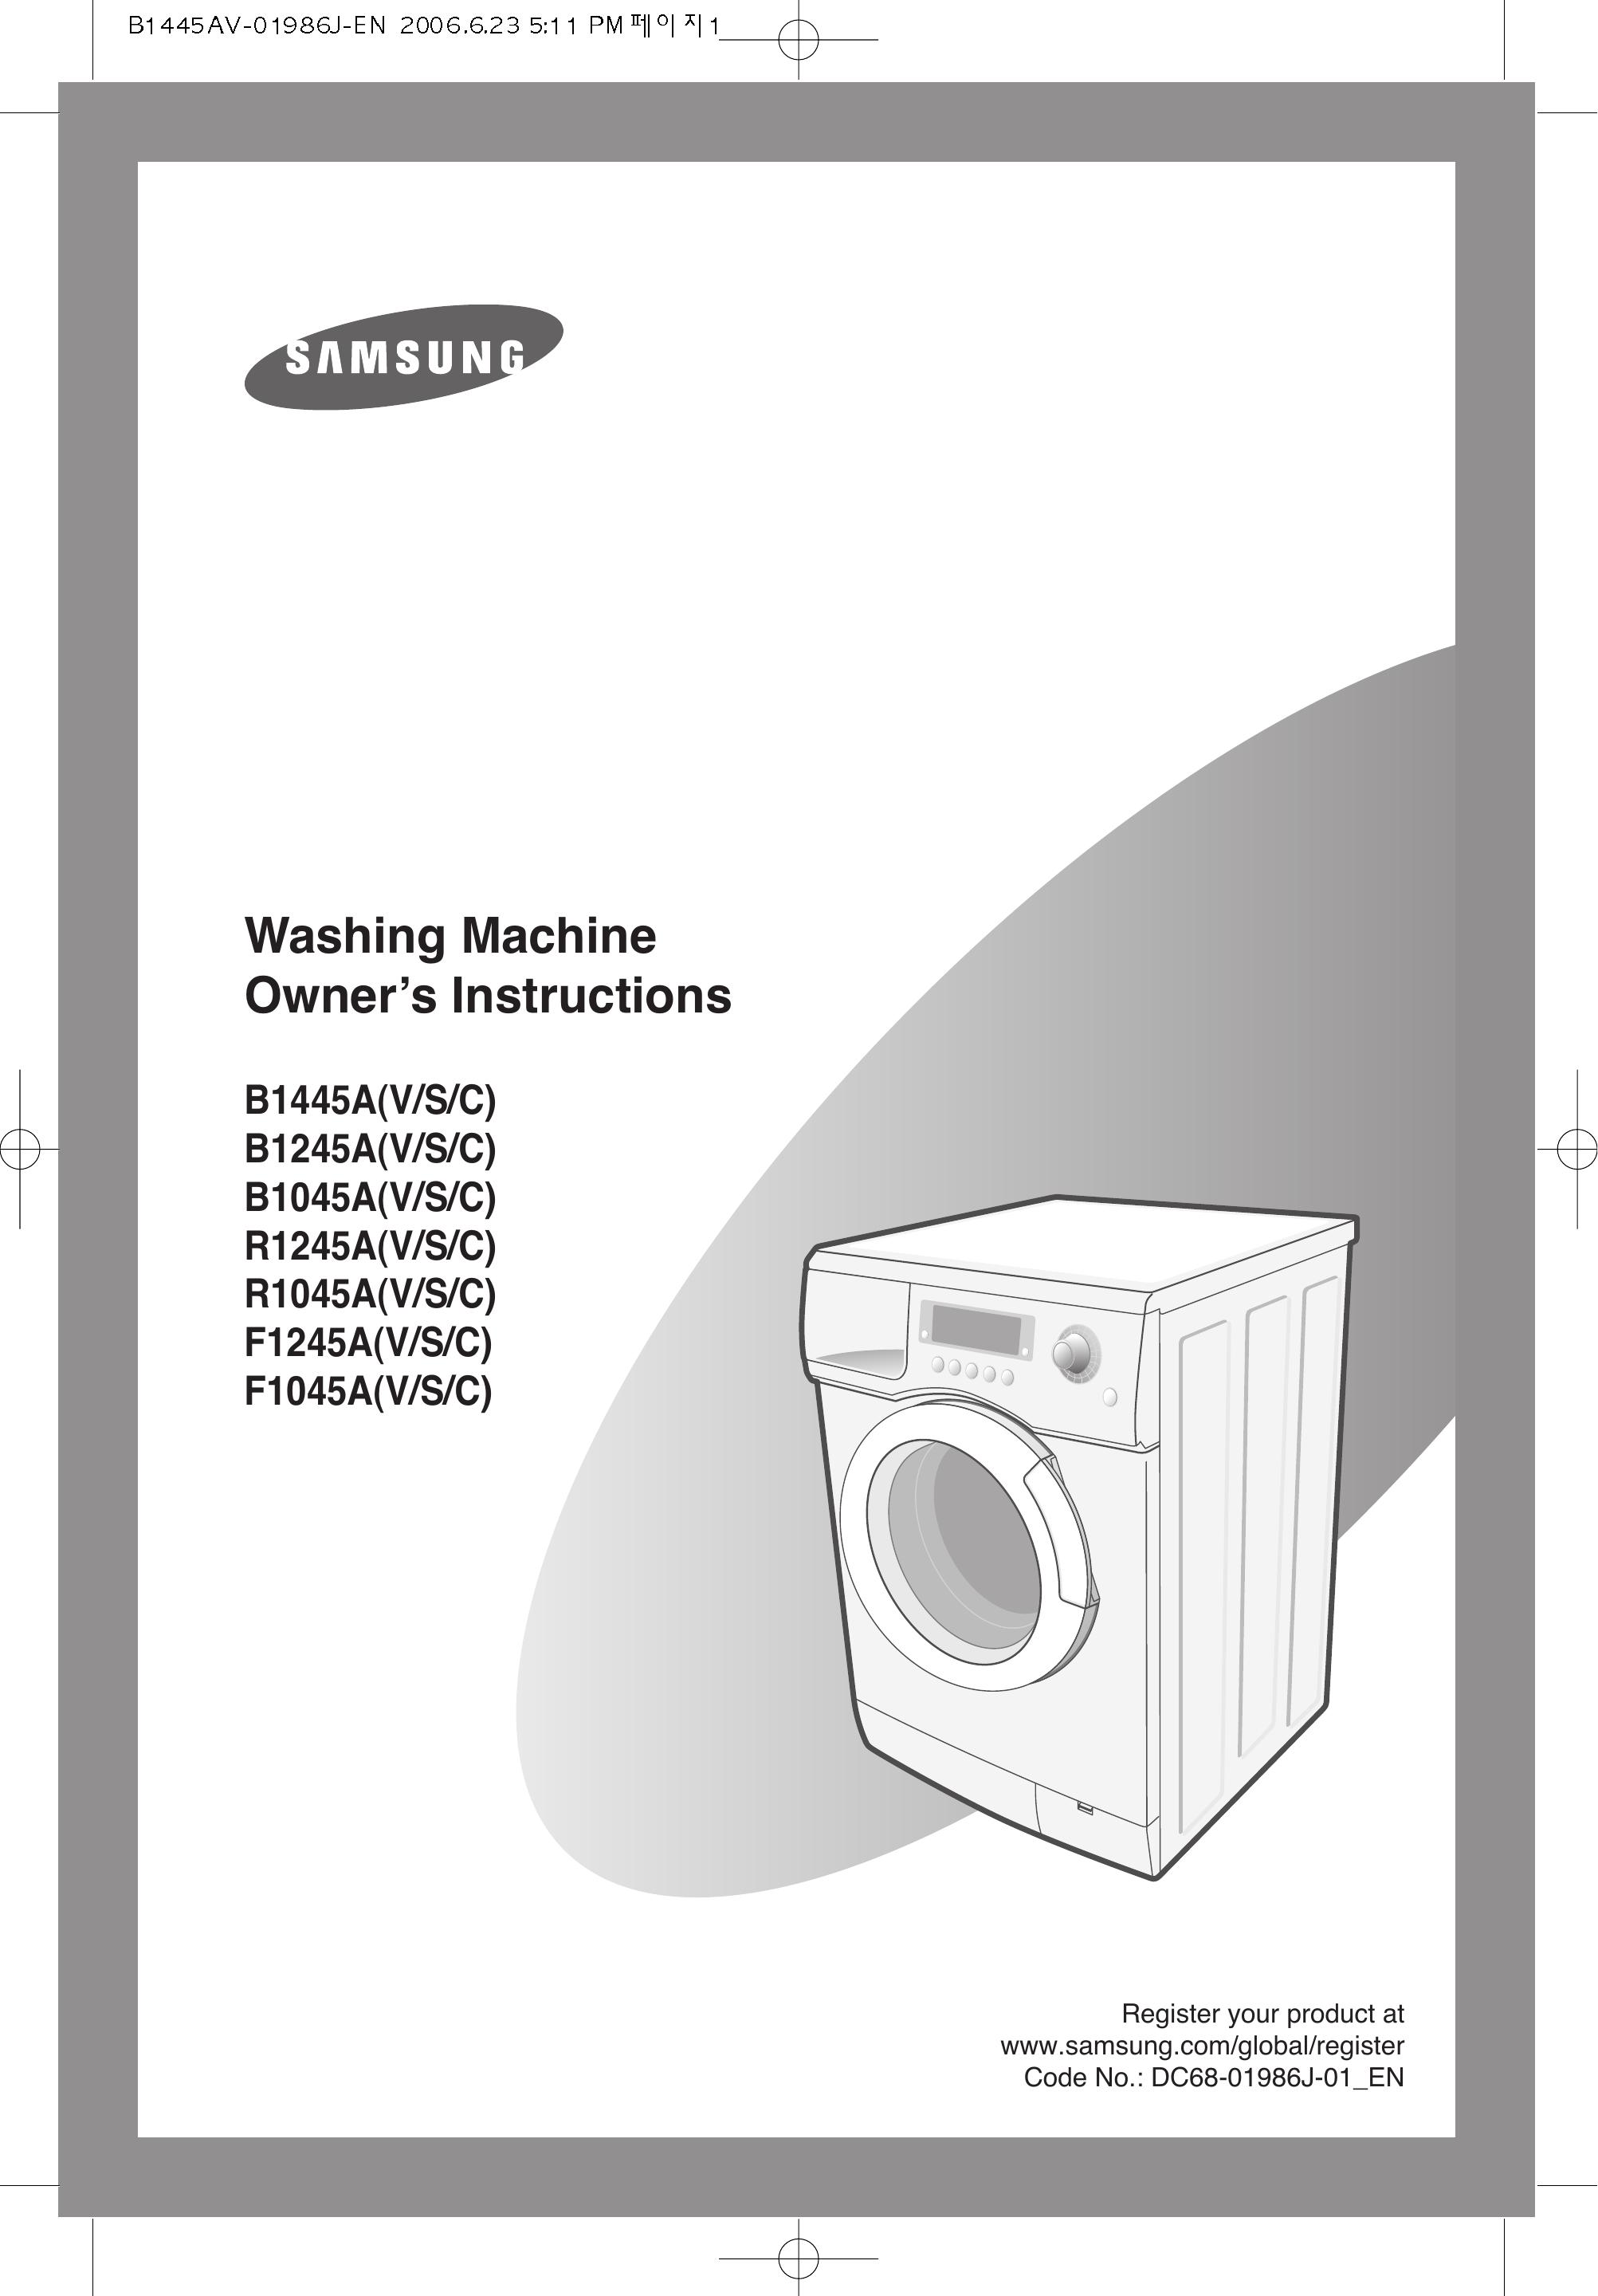 Samsung B1245A(V/S/C) Washer User Manual